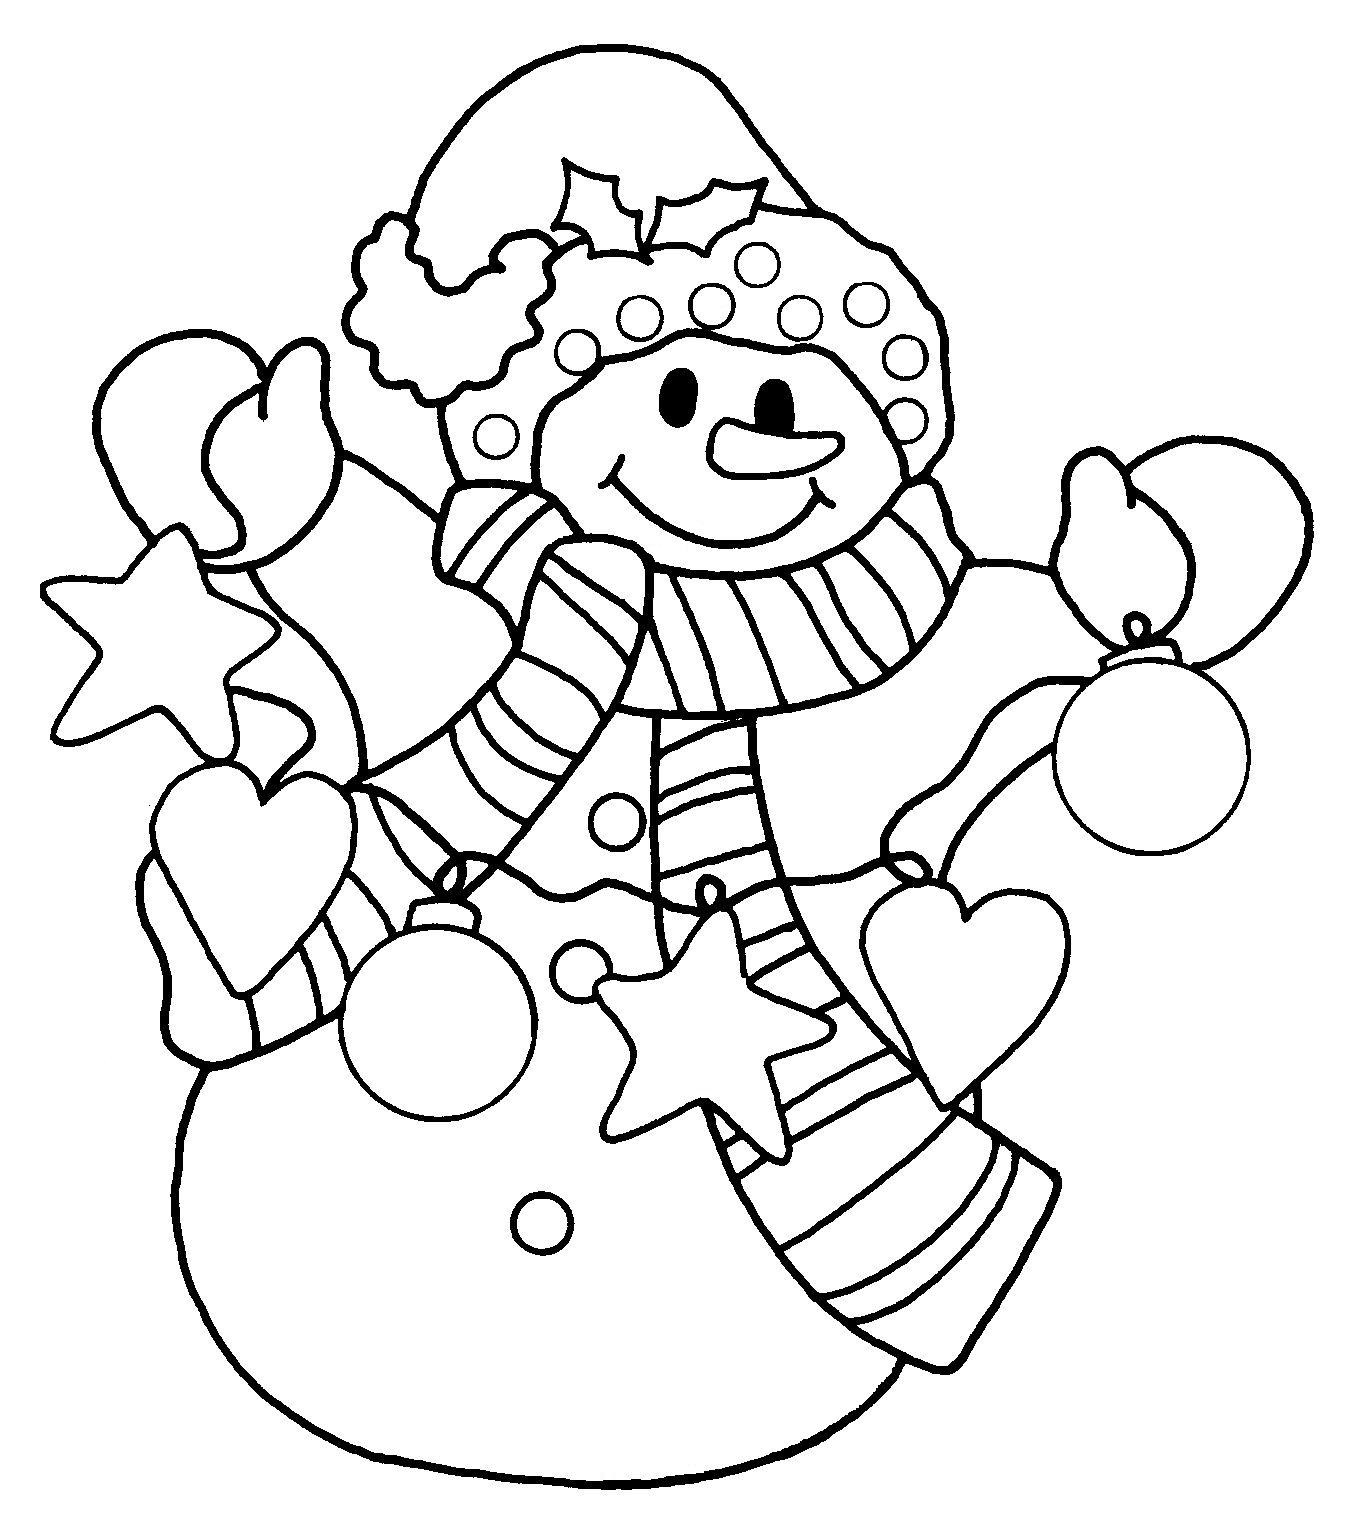 Snowman Coloring Pages Printable
 DZ Doodles Digital Stamps Oodles of Doodles News Freebie